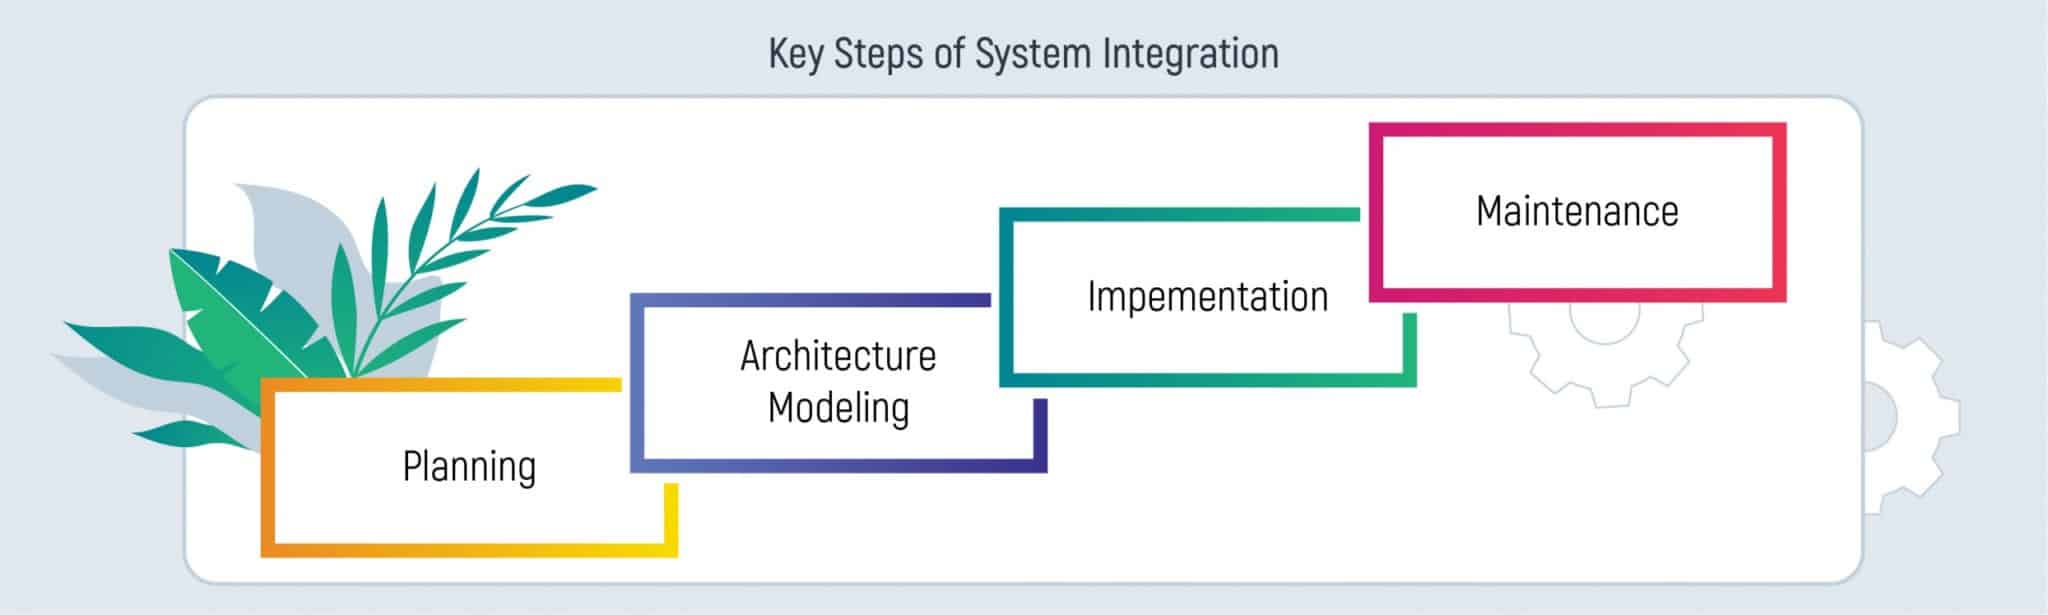 Key Steps of System Integration